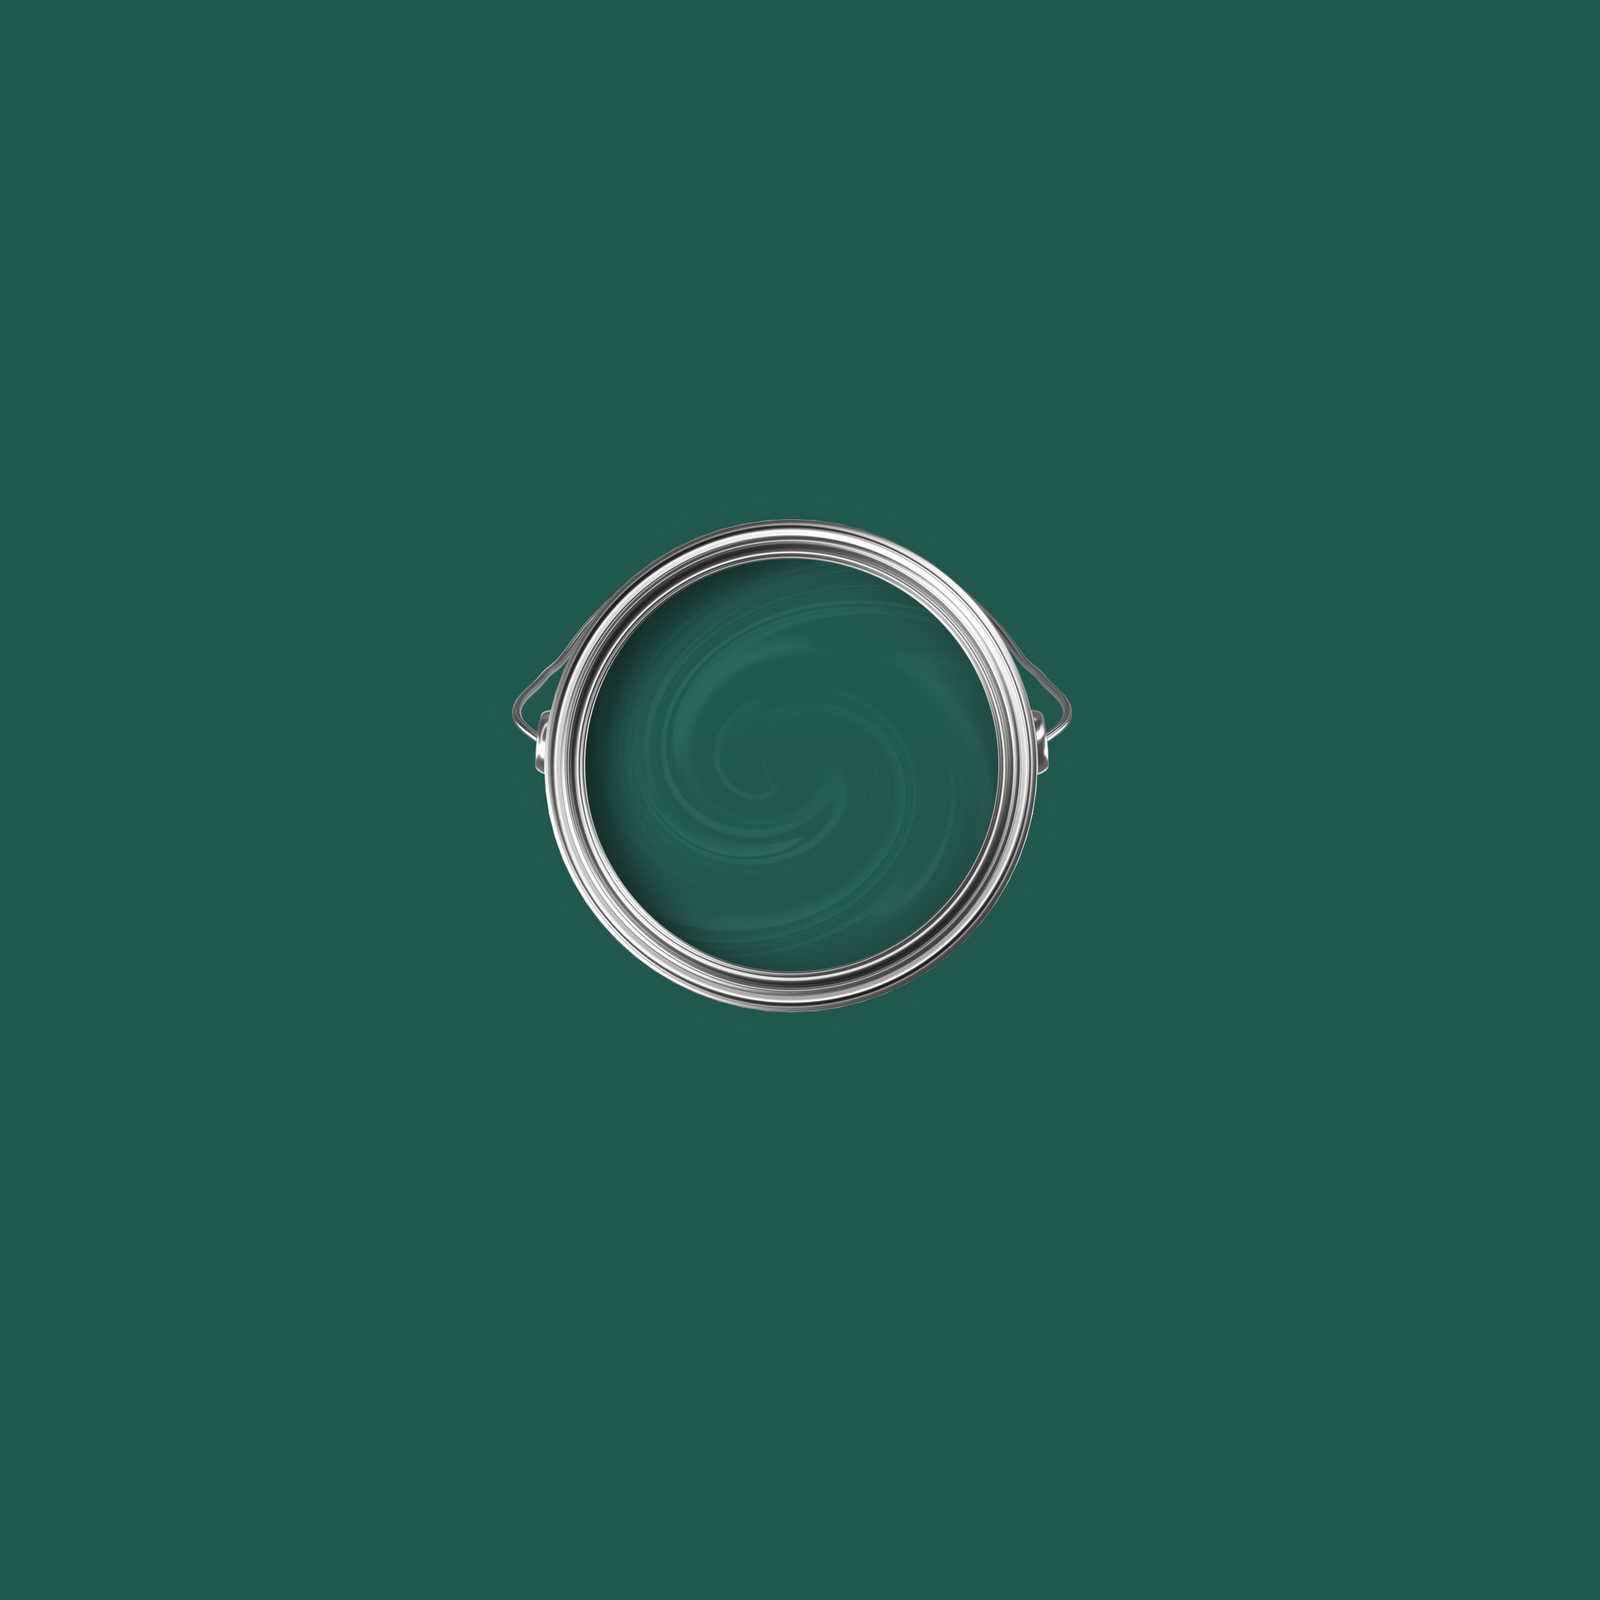             Premium Wandfarbe prachtvolles Smaragdgrün »Expressive Emerald« NW412 – 1 Liter
        